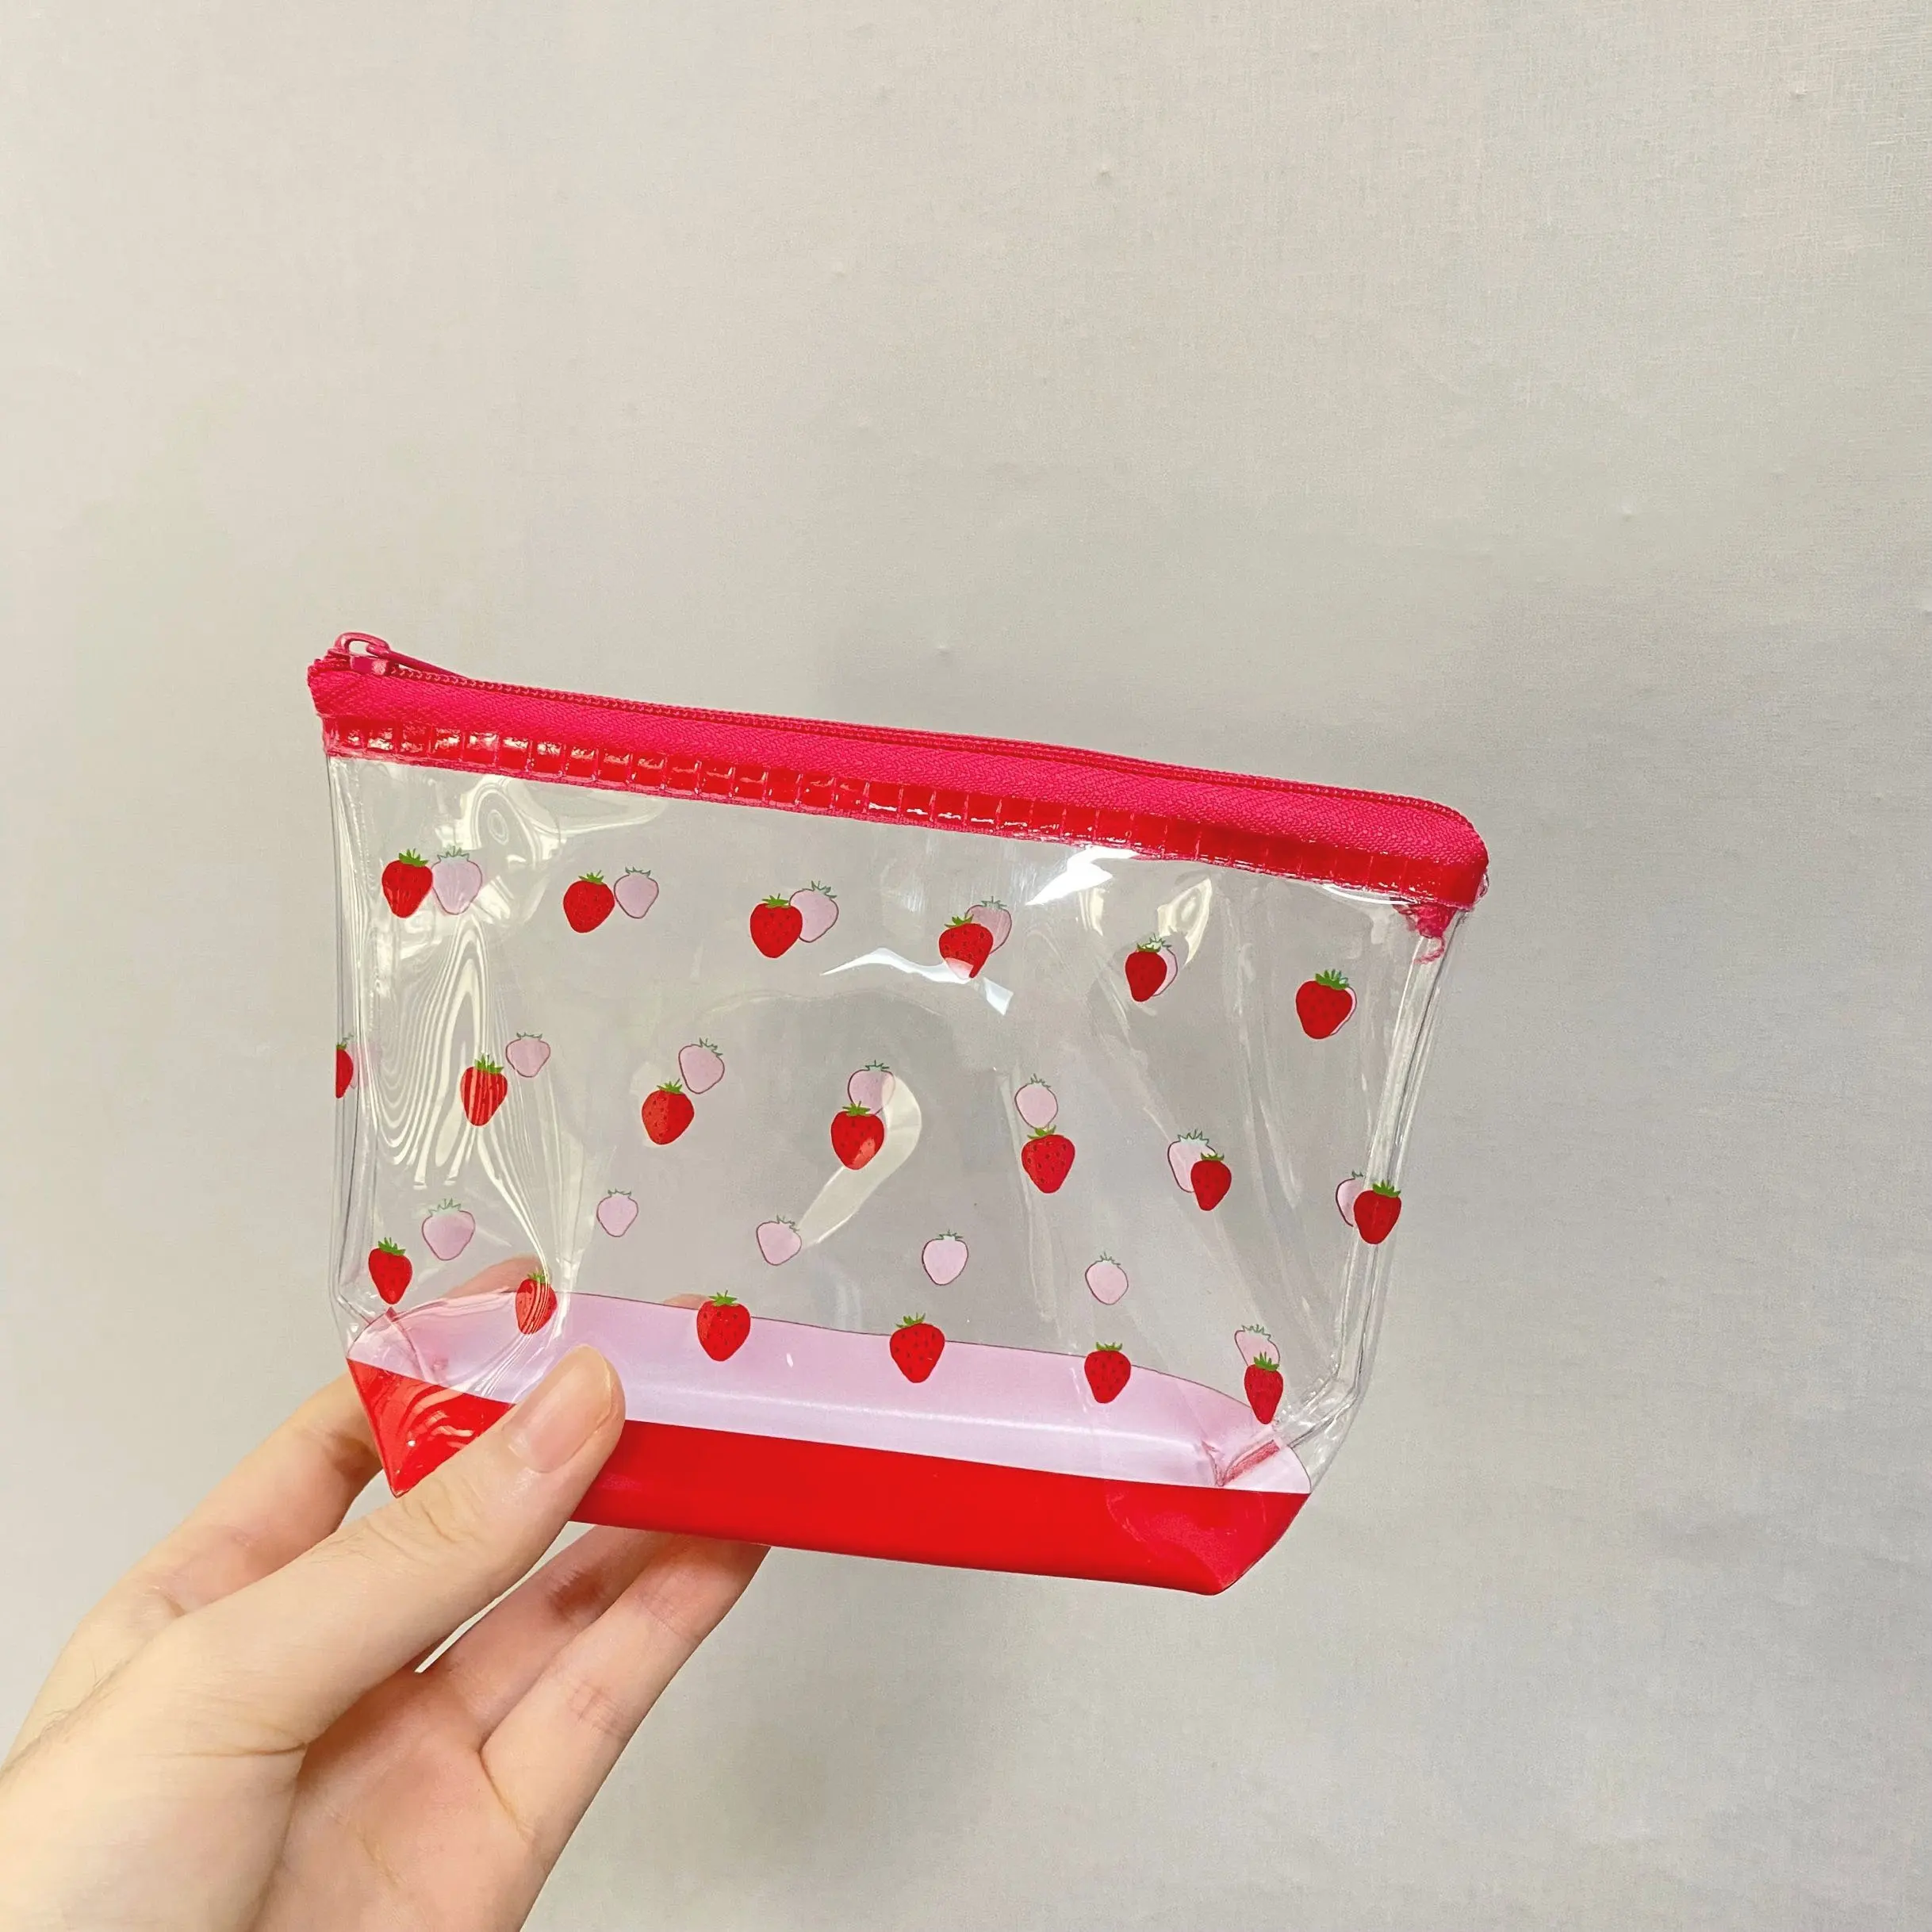 Hot sale Mini purse wallet girl PVC strawberry storage pouch zipper bag for lipstick keys and earphone